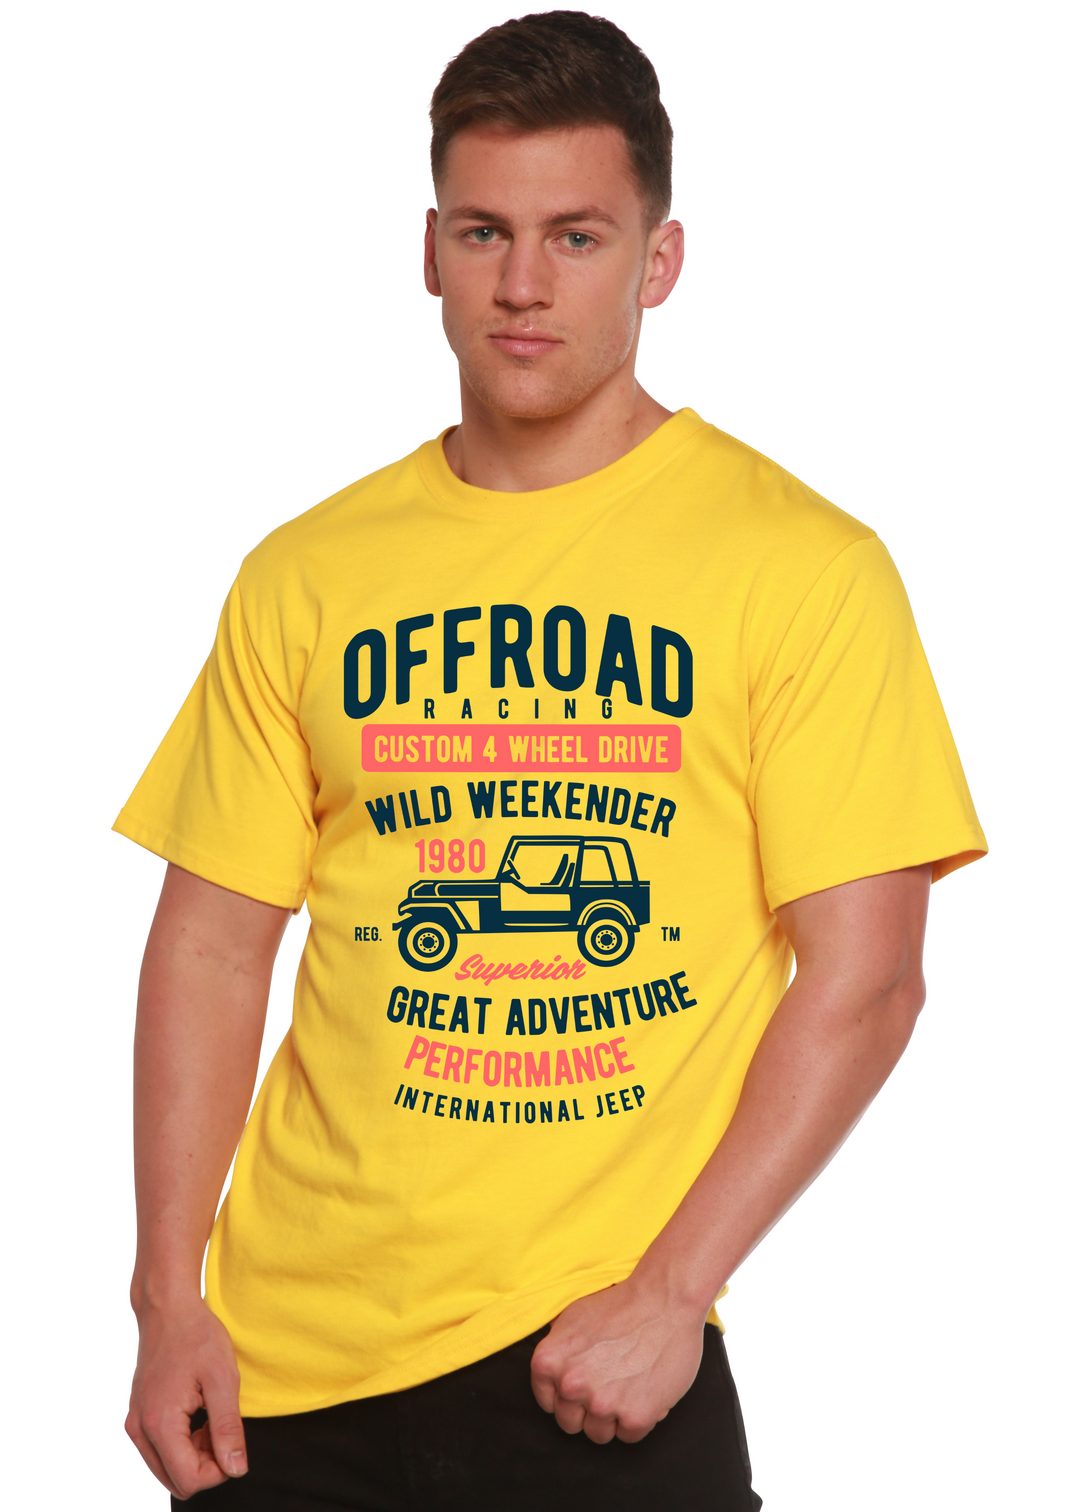 Off Road Racing men's bamboo tshirt lemon chrome